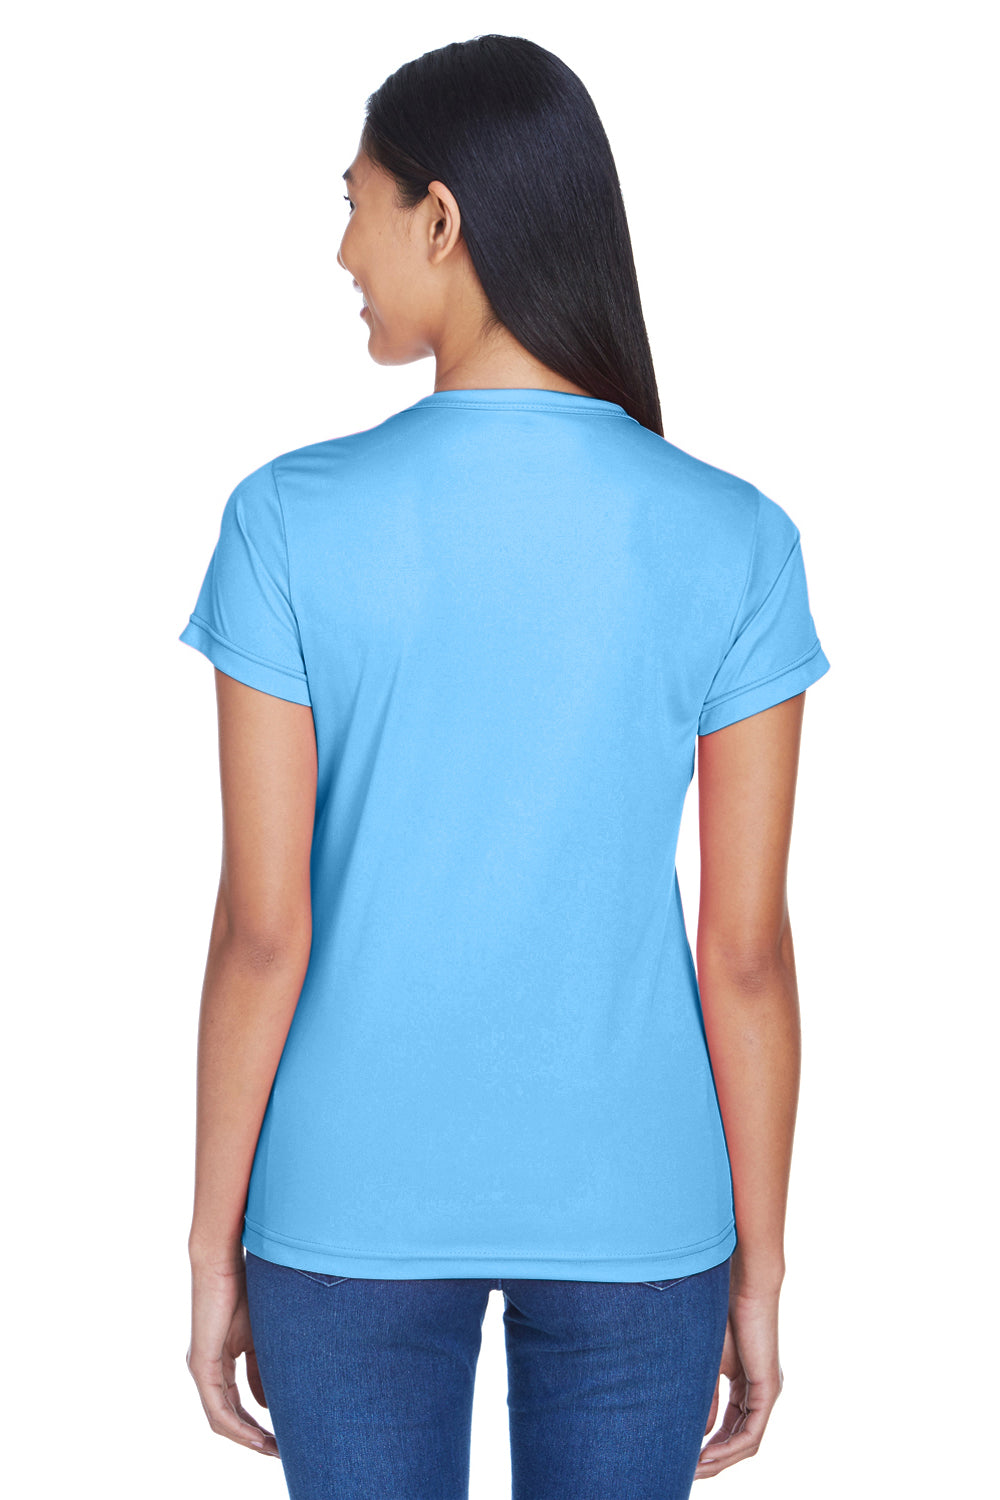 UltraClub 8420L Womens Cool & Dry Performance Moisture Wicking Short Sleeve Crewneck T-Shirt Columbia Blue Back